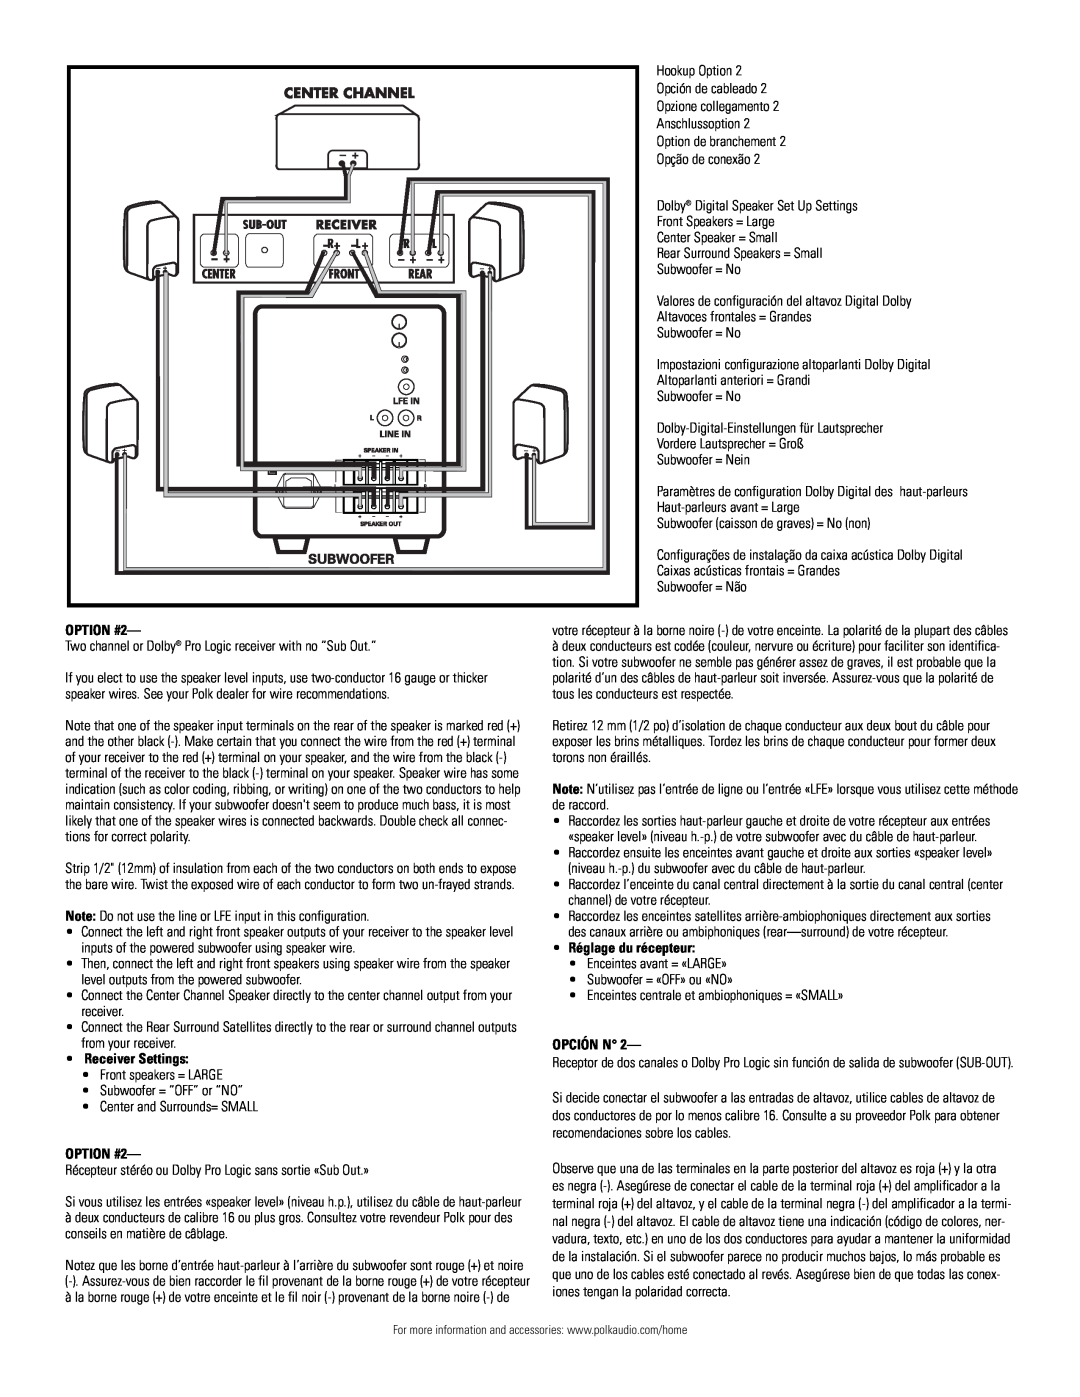 Polk Audio PSW111 owner manual OPTION #2, Receiver Settings, Réglage du récepteur, Opción N 